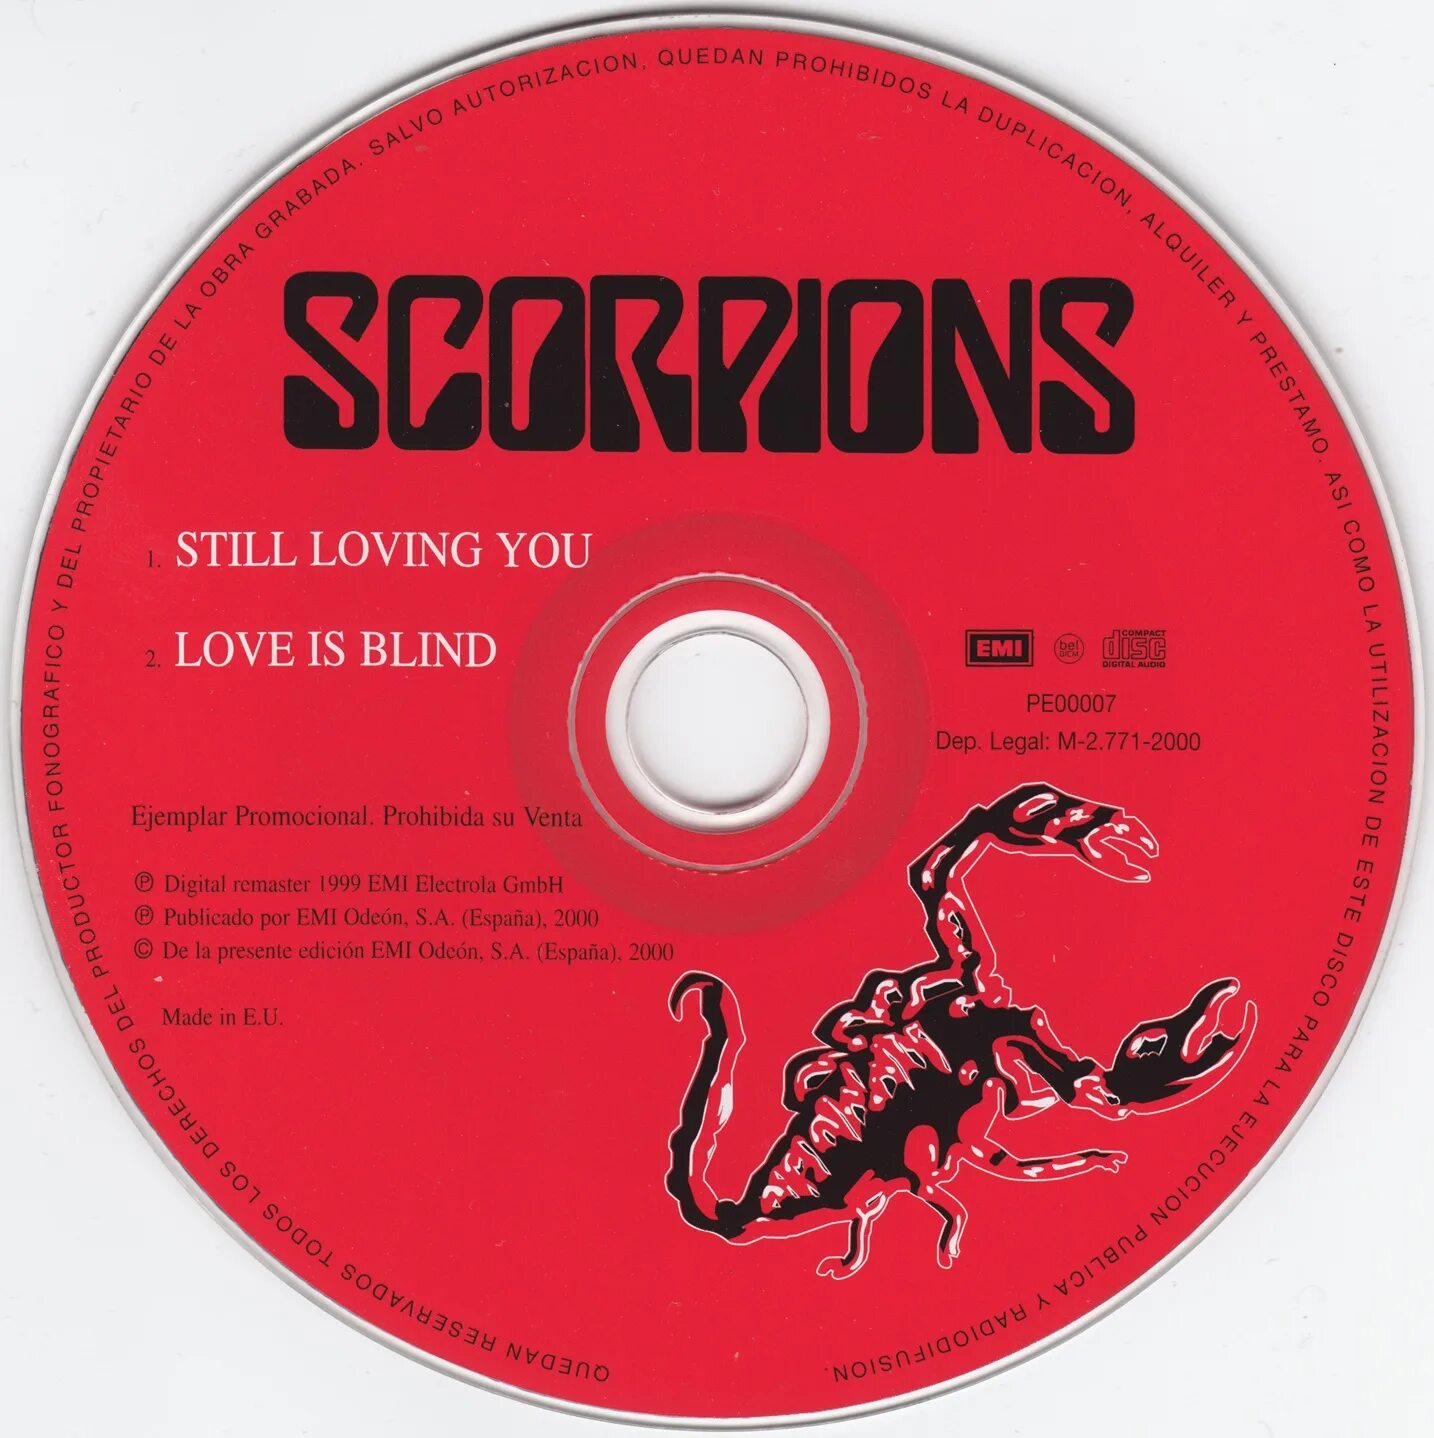 Обложка альбома Scorpions--1992-still loving. Scorpions "still loving you" 1992 обложка. Скорпионс стил. Группа Scorpions 1992.